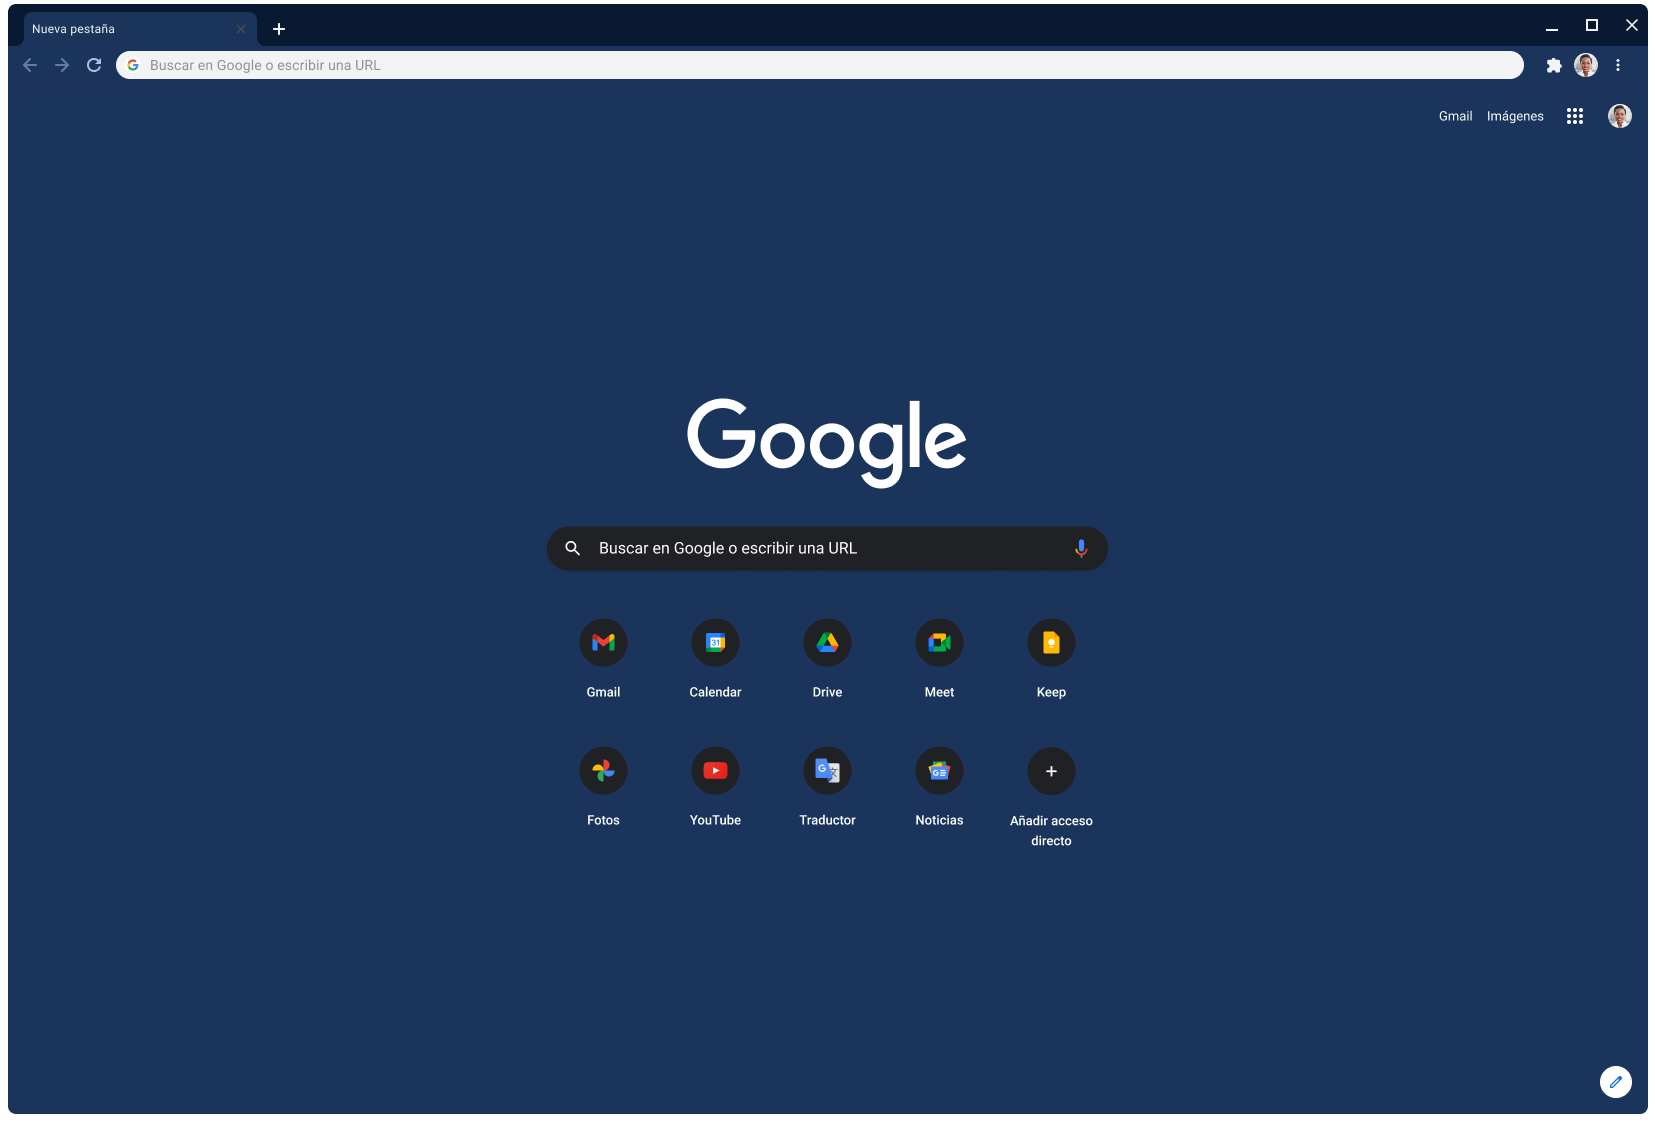 Ventana del navegador Chrome donde se muestra Google.com, con el tema Slate.